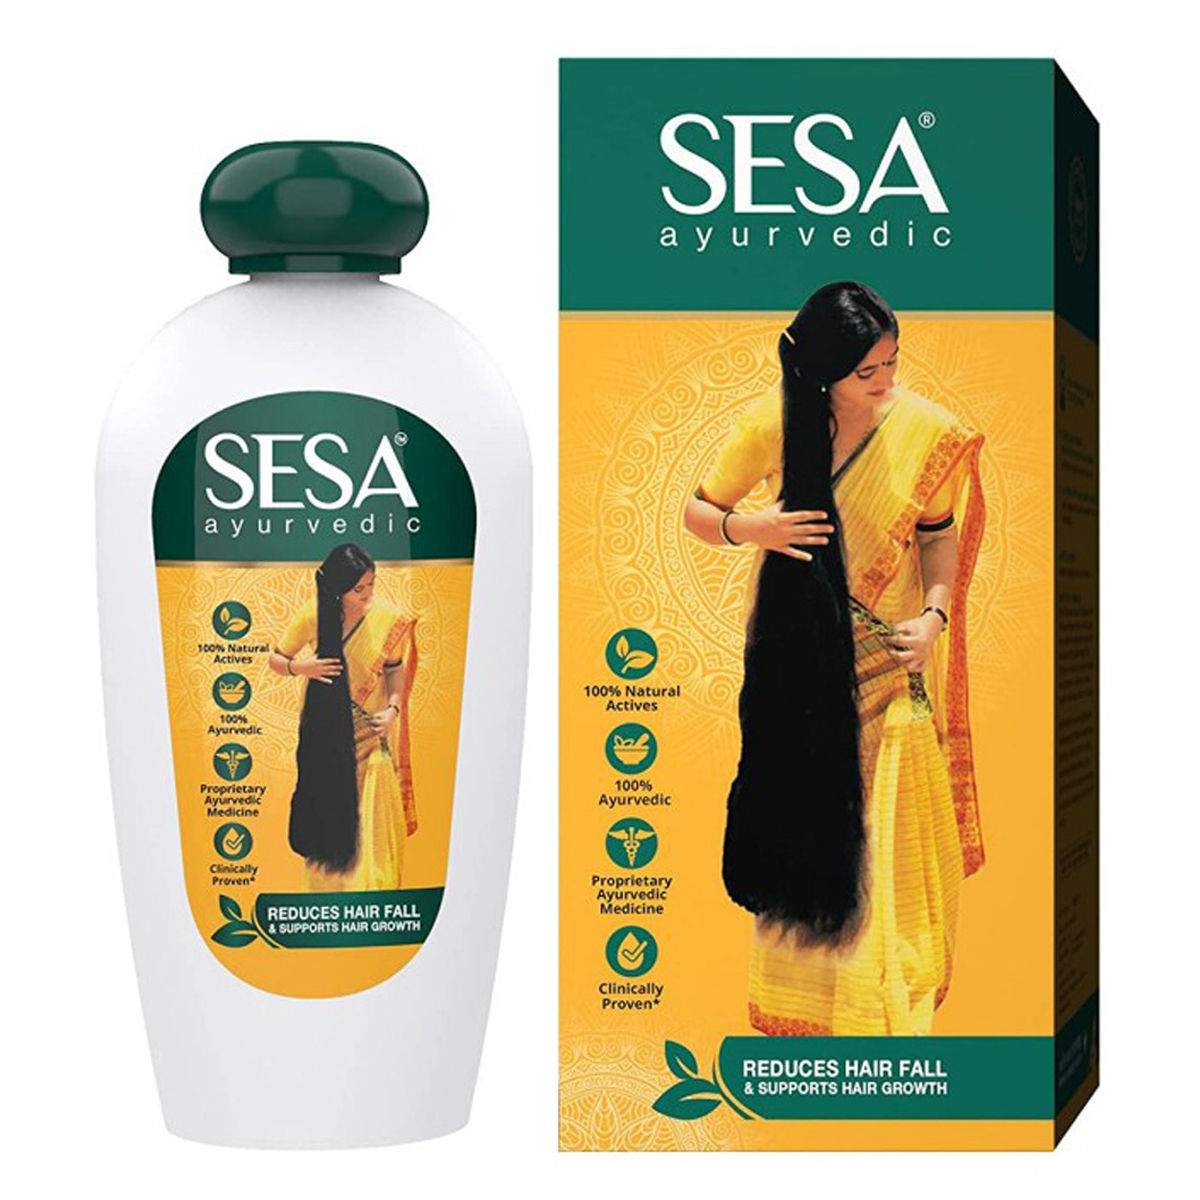 SESA Ayurvedic Hair Oil for Reduce Hair Fall and Support Hair Growth 100ml  *NEW* 8904319400006 | eBay